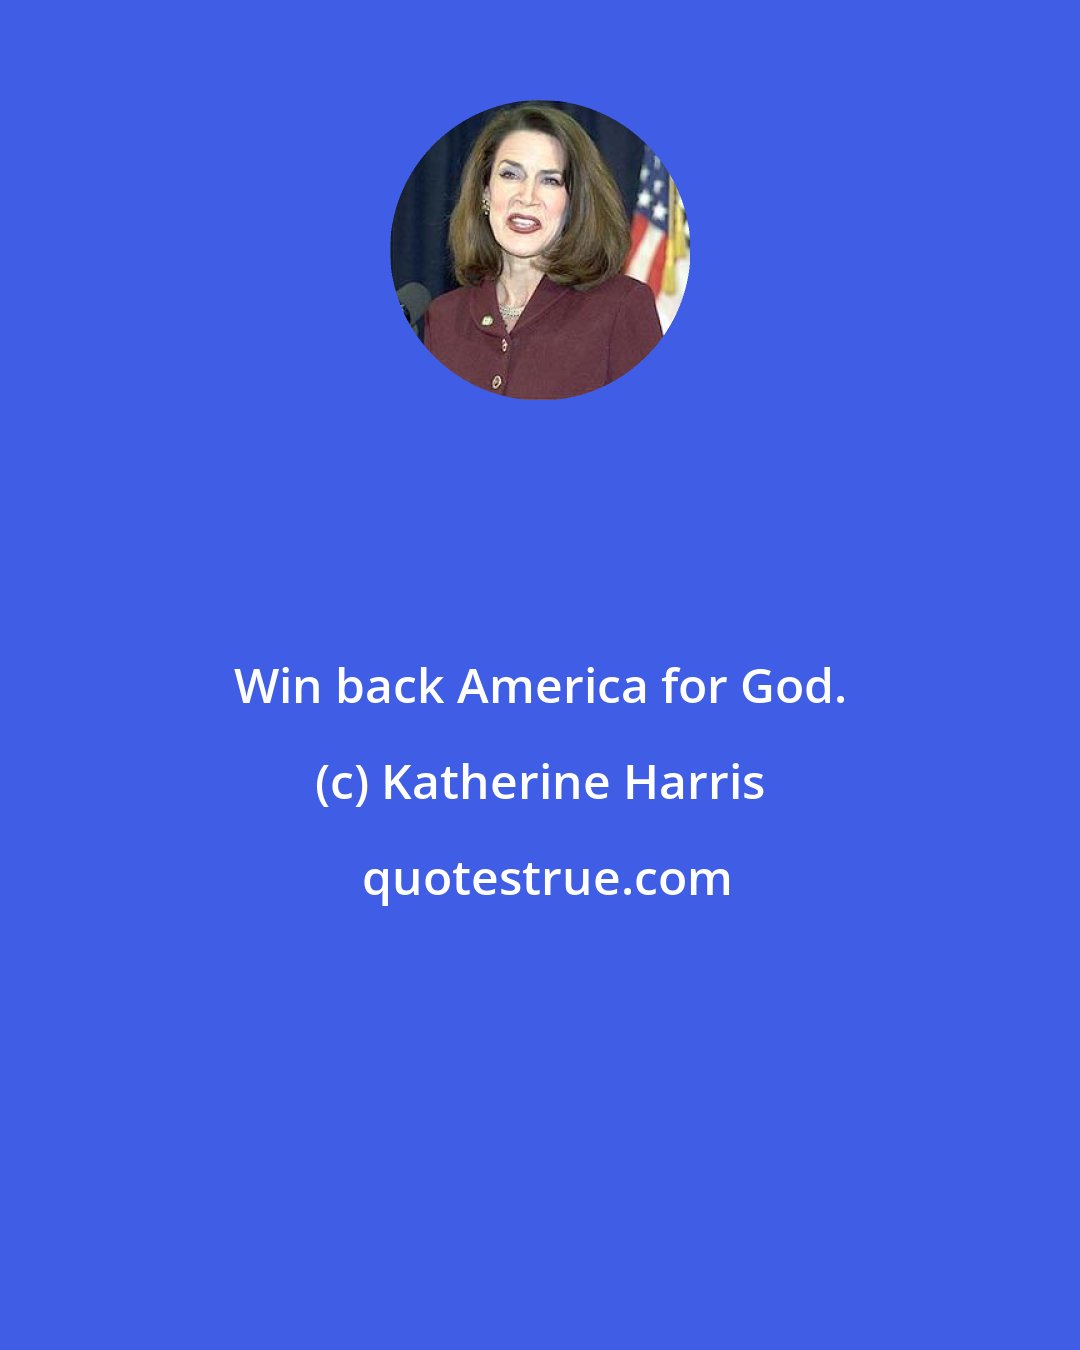 Katherine Harris: Win back America for God.